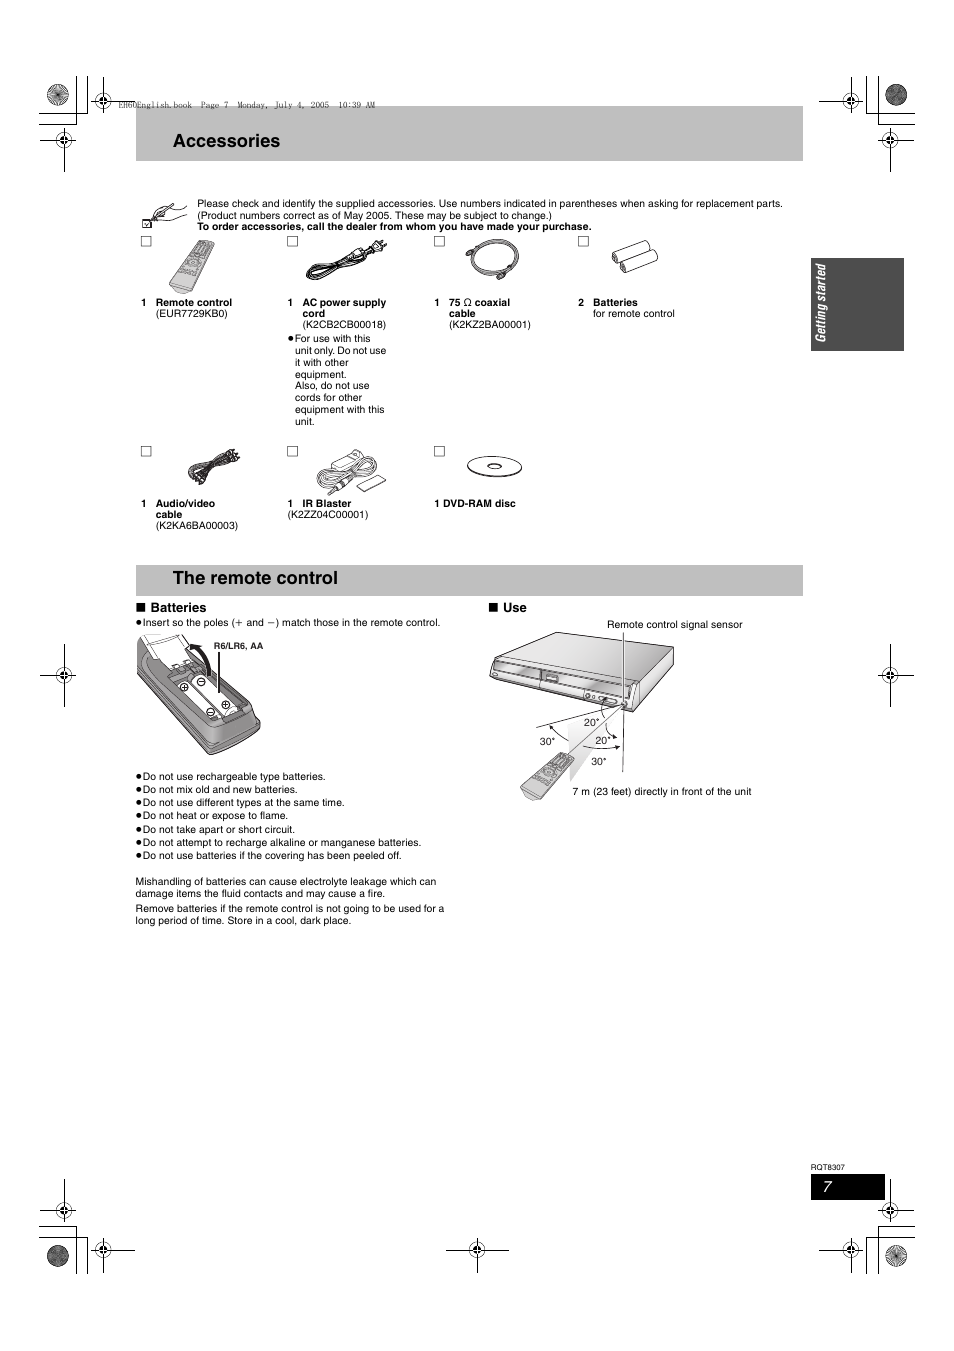 Accessories, The remote control | Panasonic DMR-EH60 EN User Manual